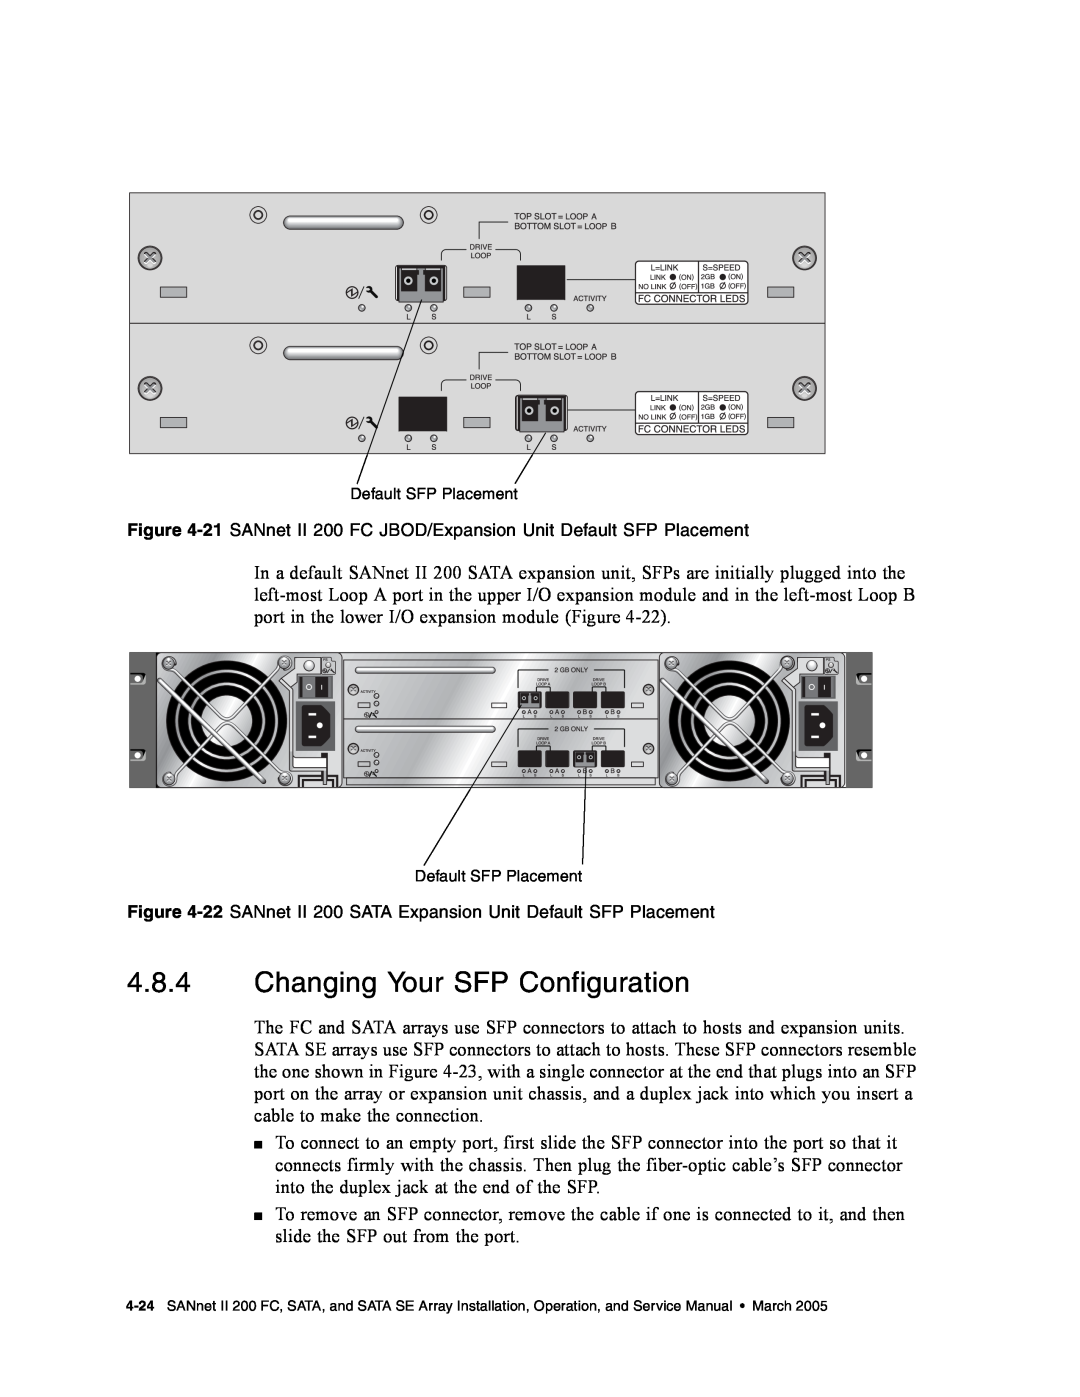 Dot Hill Systems II 200 FC Changing Your SFP Configuration, 22 SANnet II 200 SATA Expansion Unit Default SFP Placement 